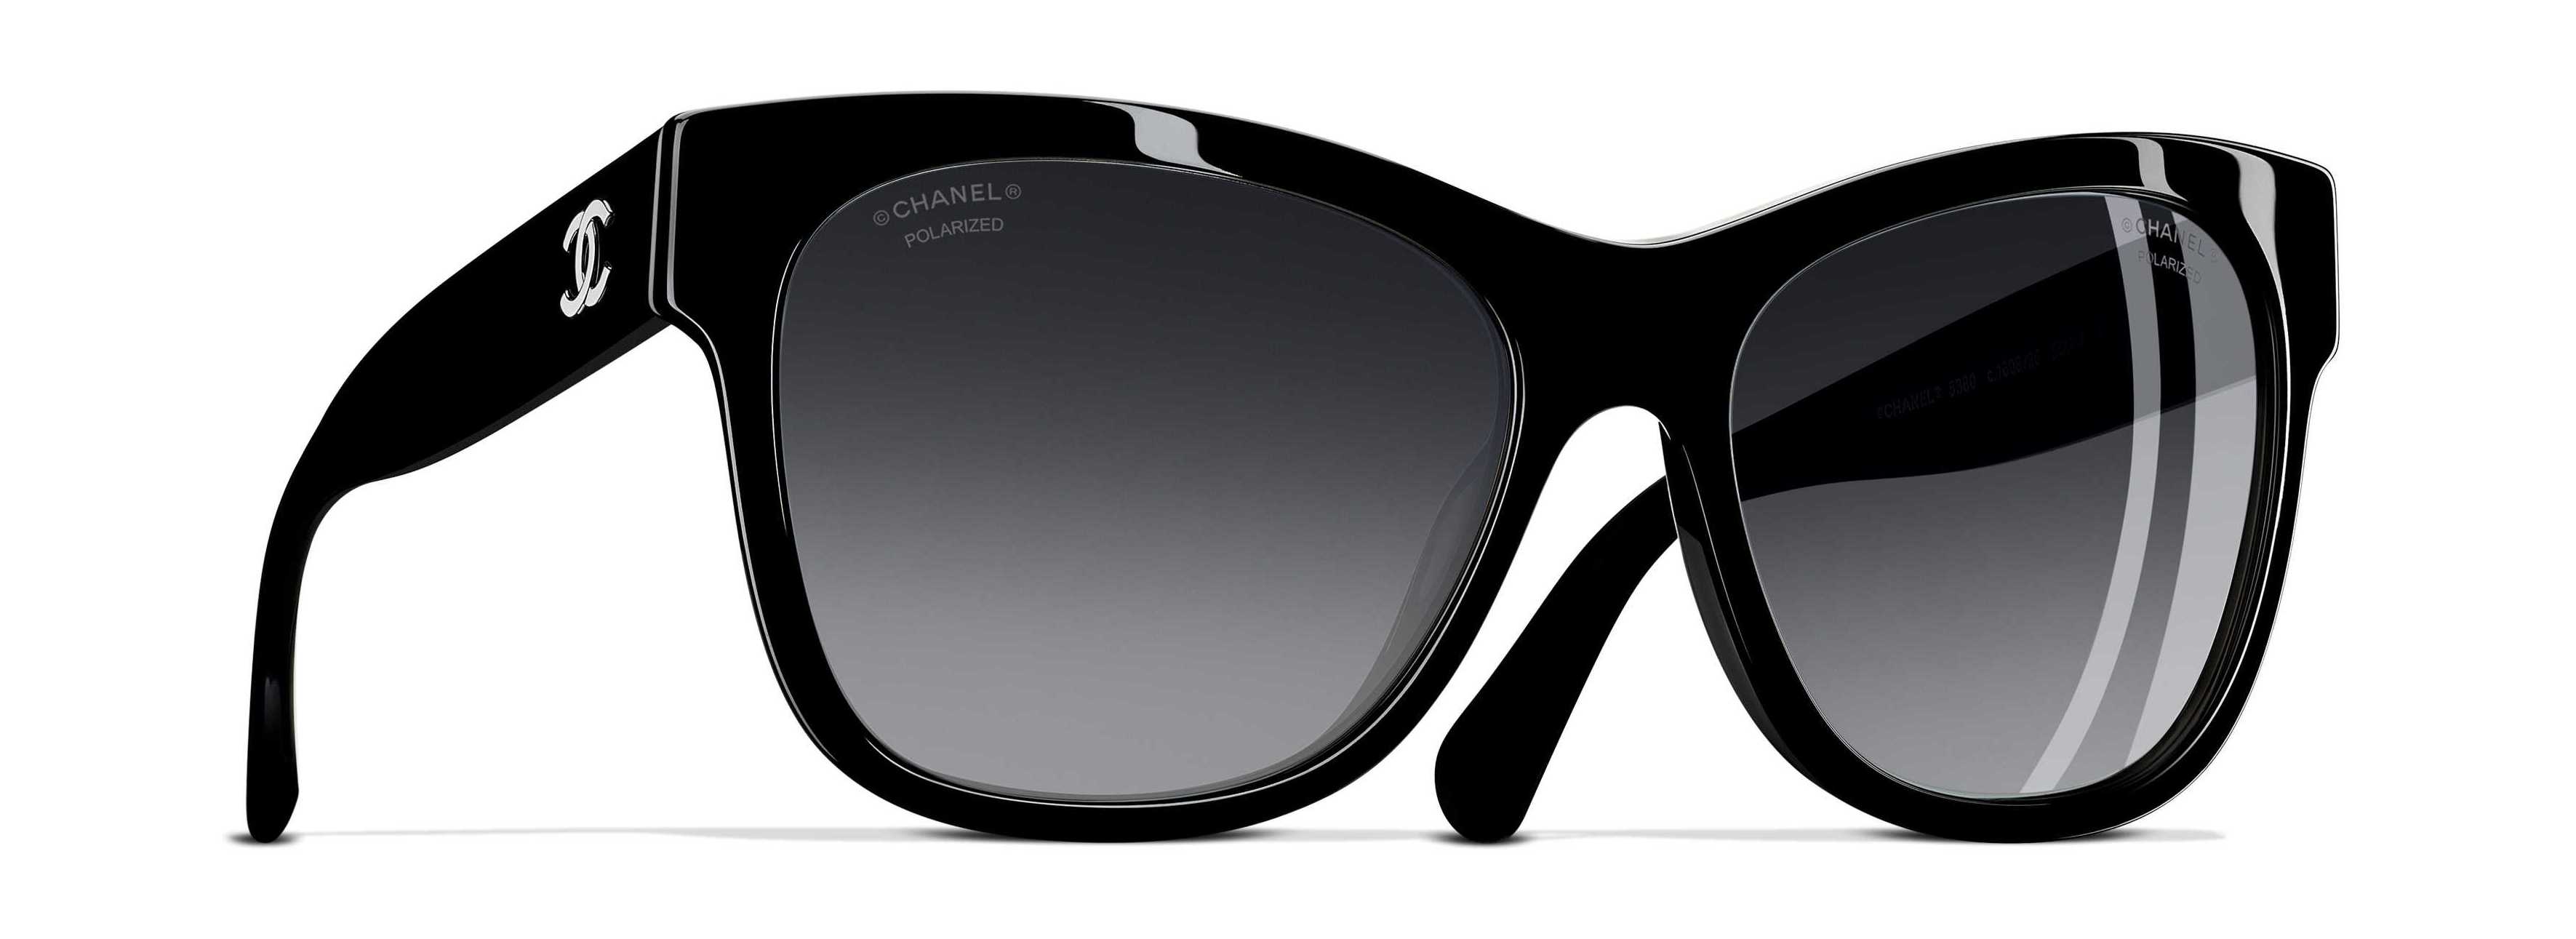 Sunglasses CHANEL CH 5380 C501S8 56/17 Woman noir butterfly Full Frame